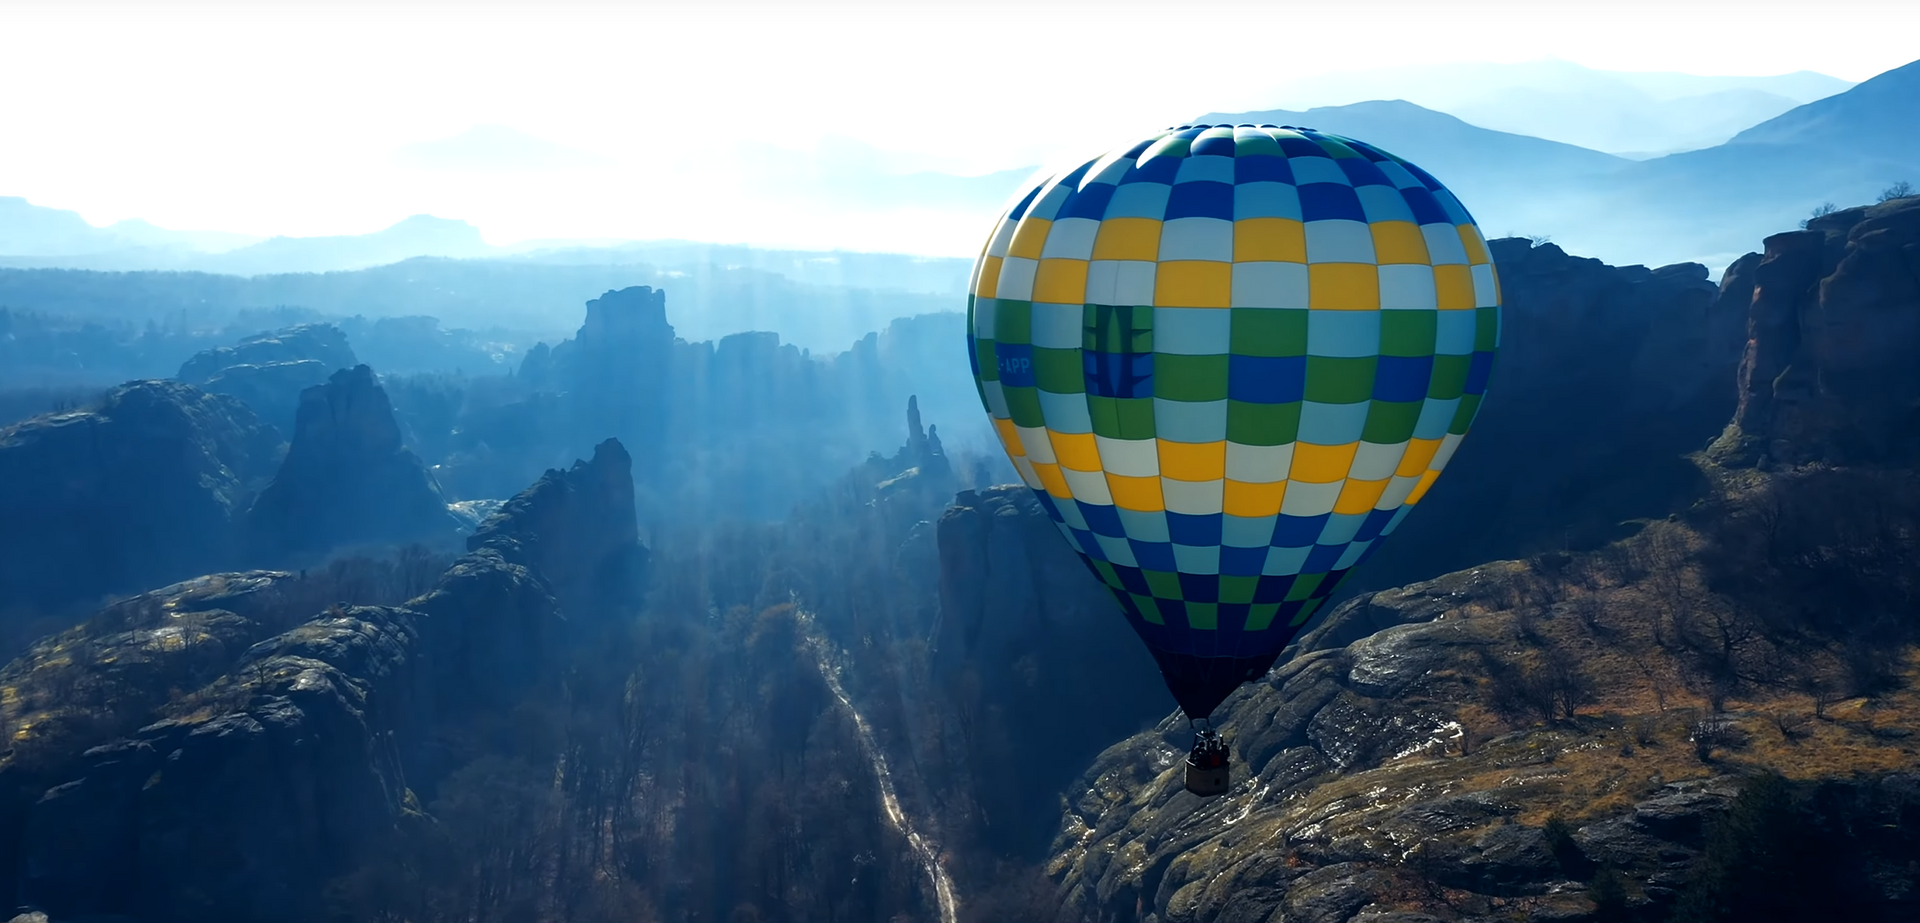 Belogradchik Balloon flights and experiences